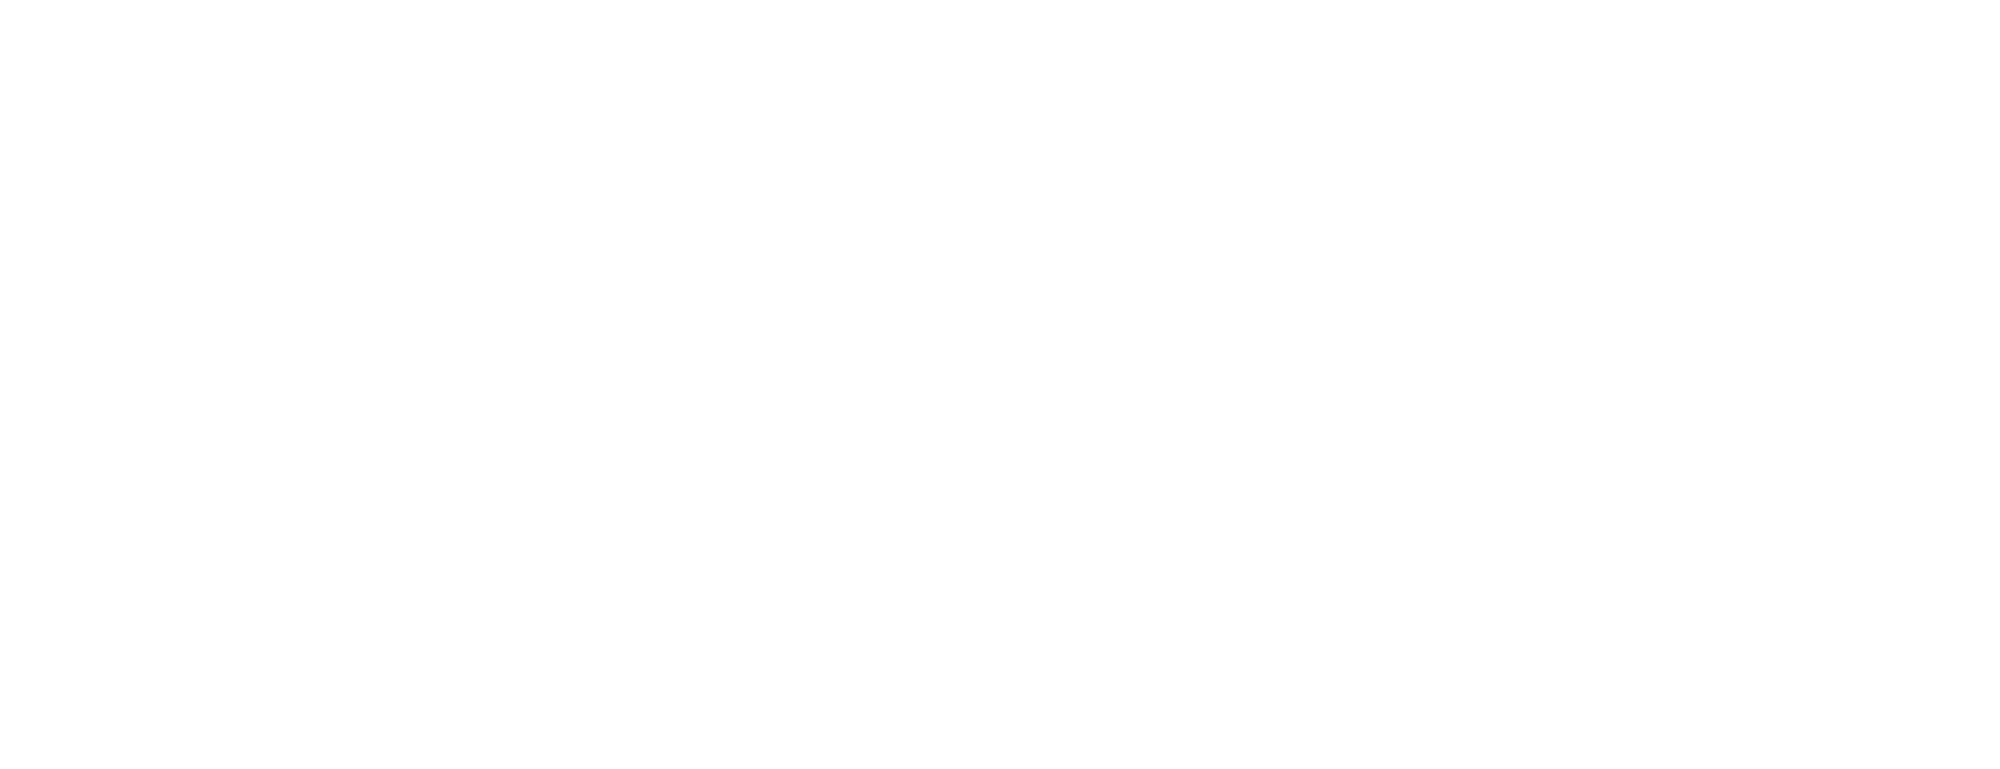 Isologotipo-Fractional-Class-horizontal-calado